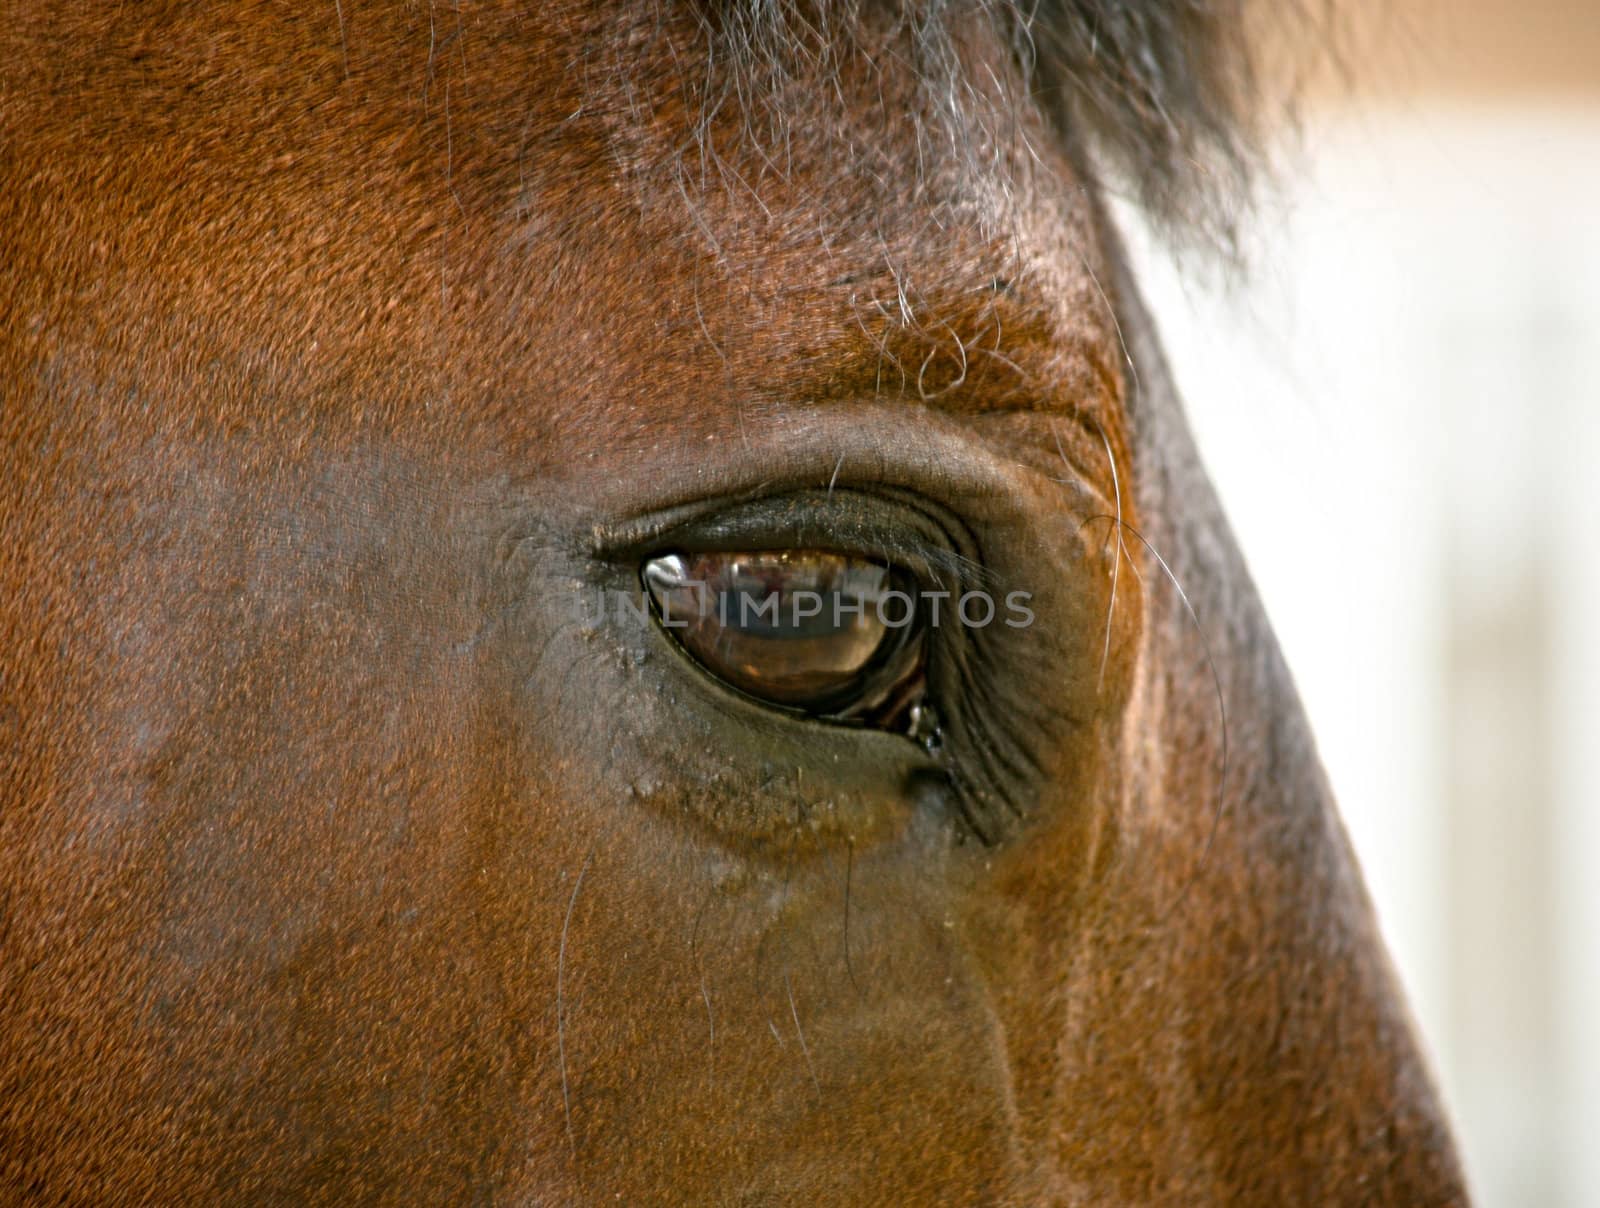 A close-up of a stallion's eye